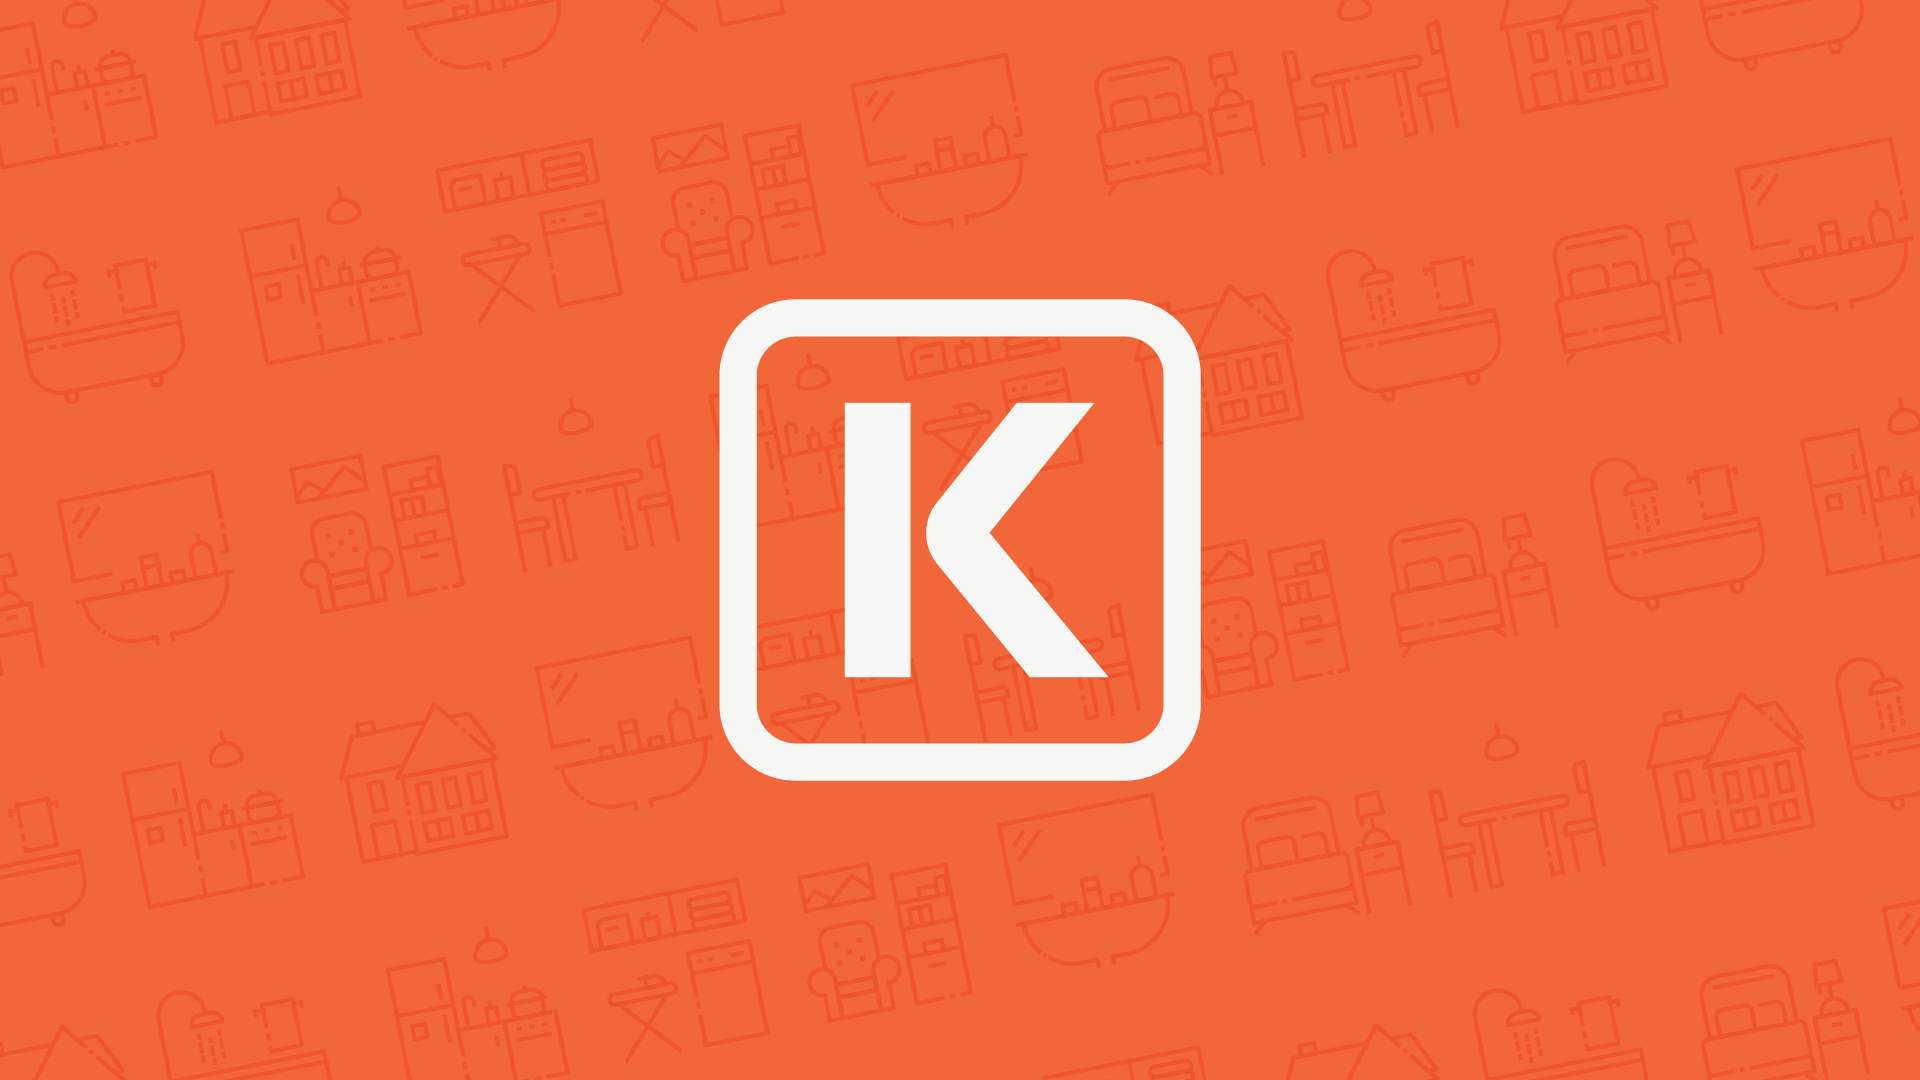 Karks contracting logo